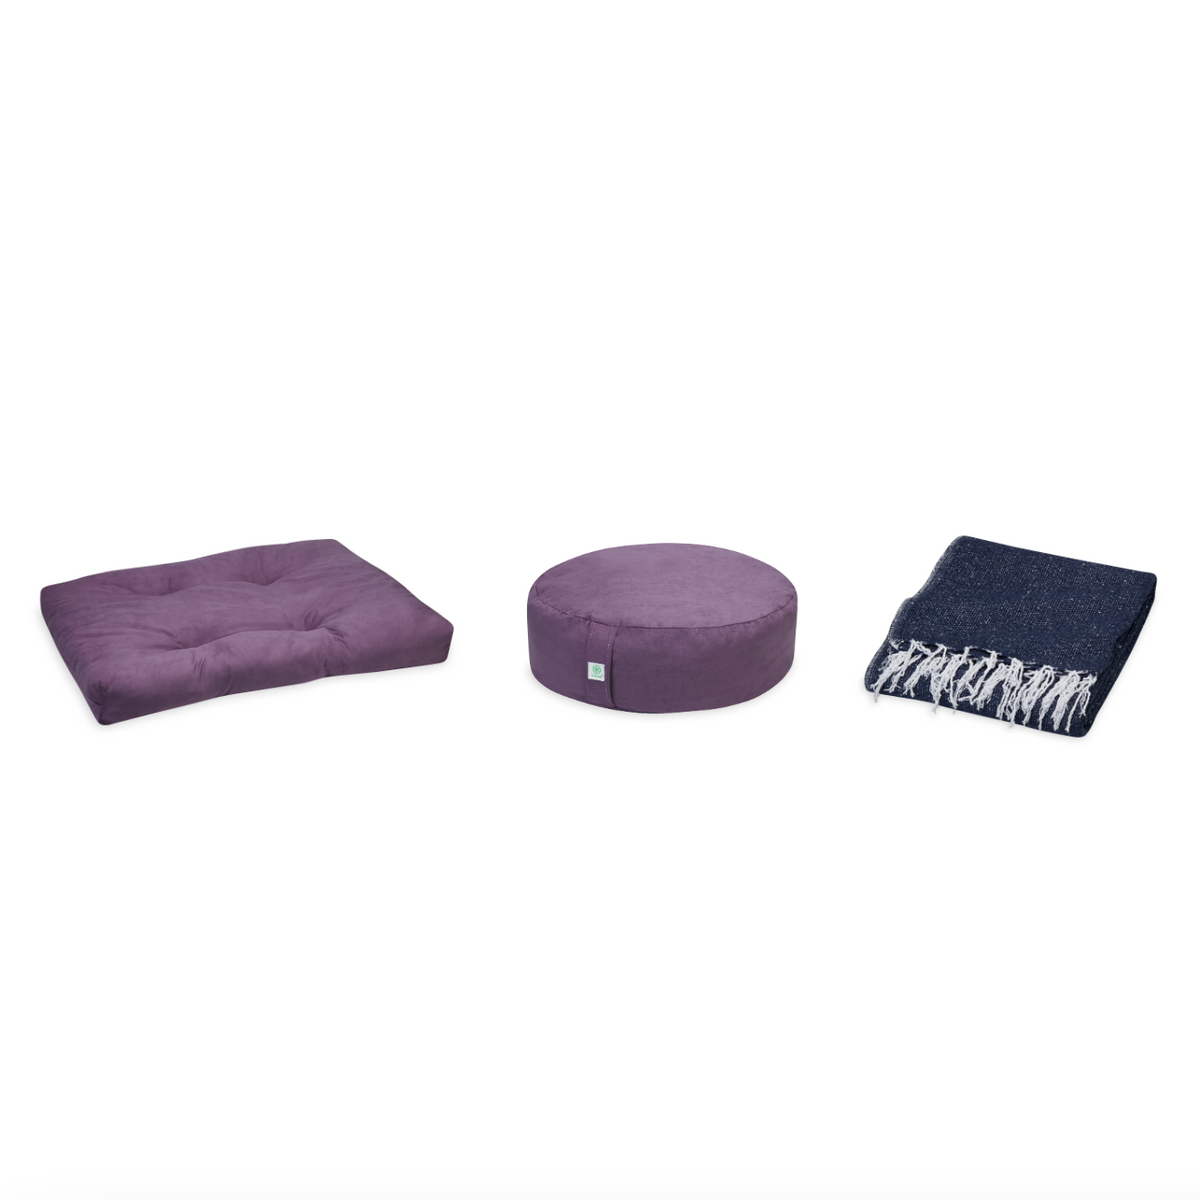 Meditation Bundle - Zabuton (Purple), Zafu (Purple), Blanket (Navy)